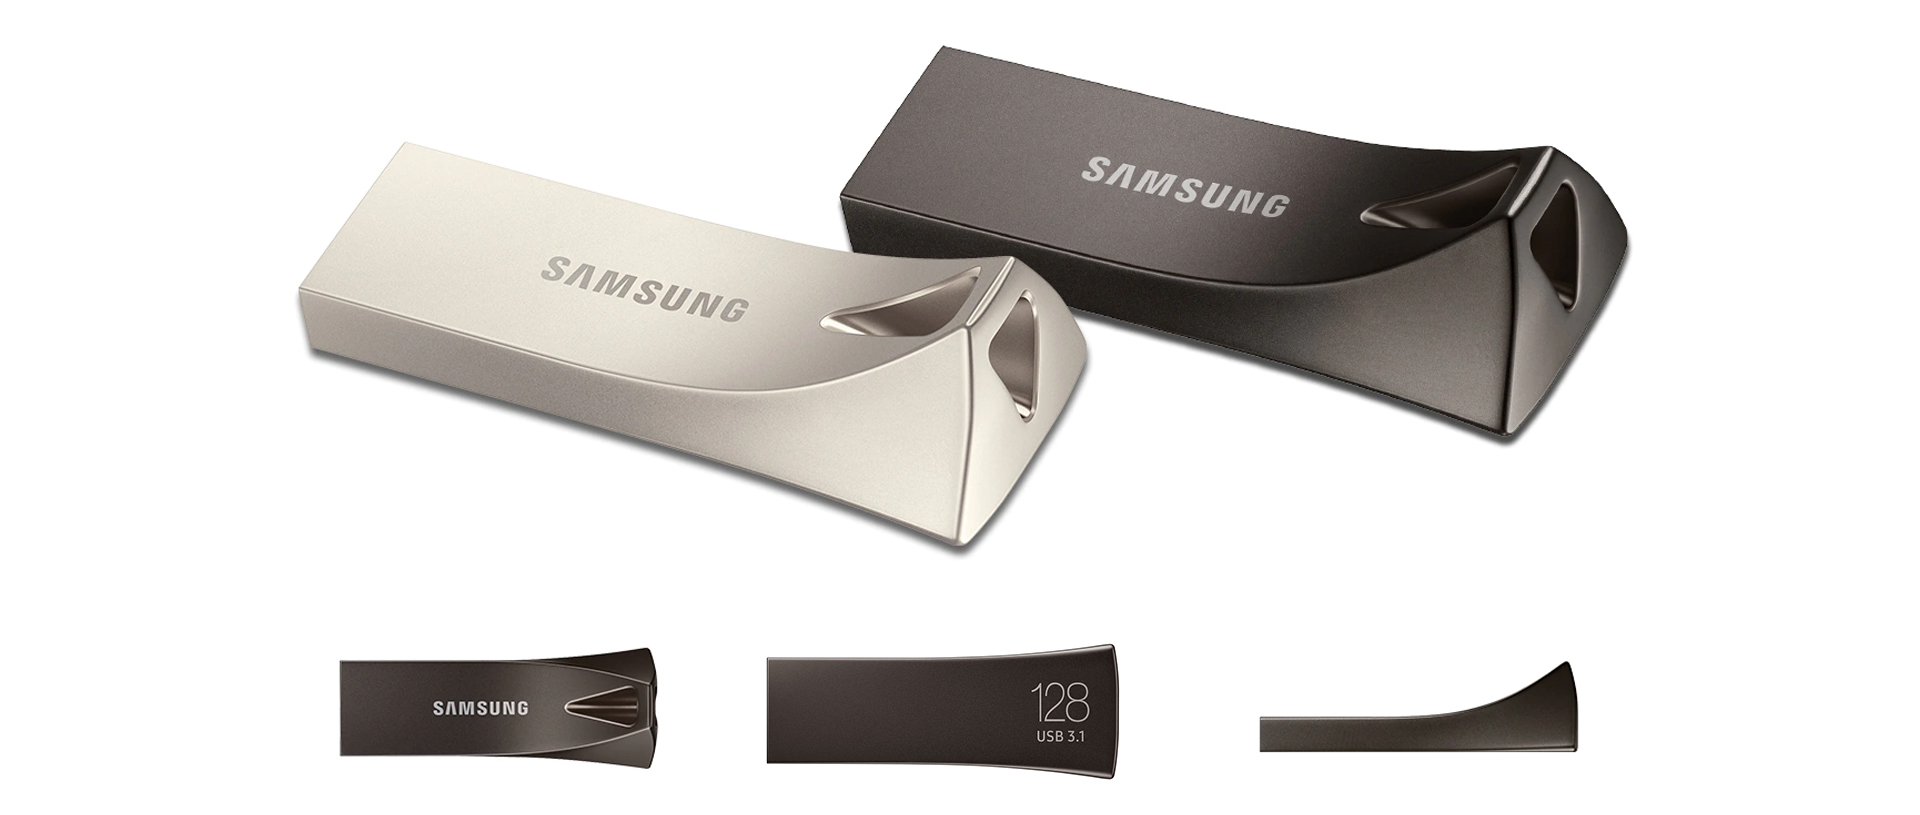 Samsung Bar Plus 128 ГБ прочности, надежности и стиля